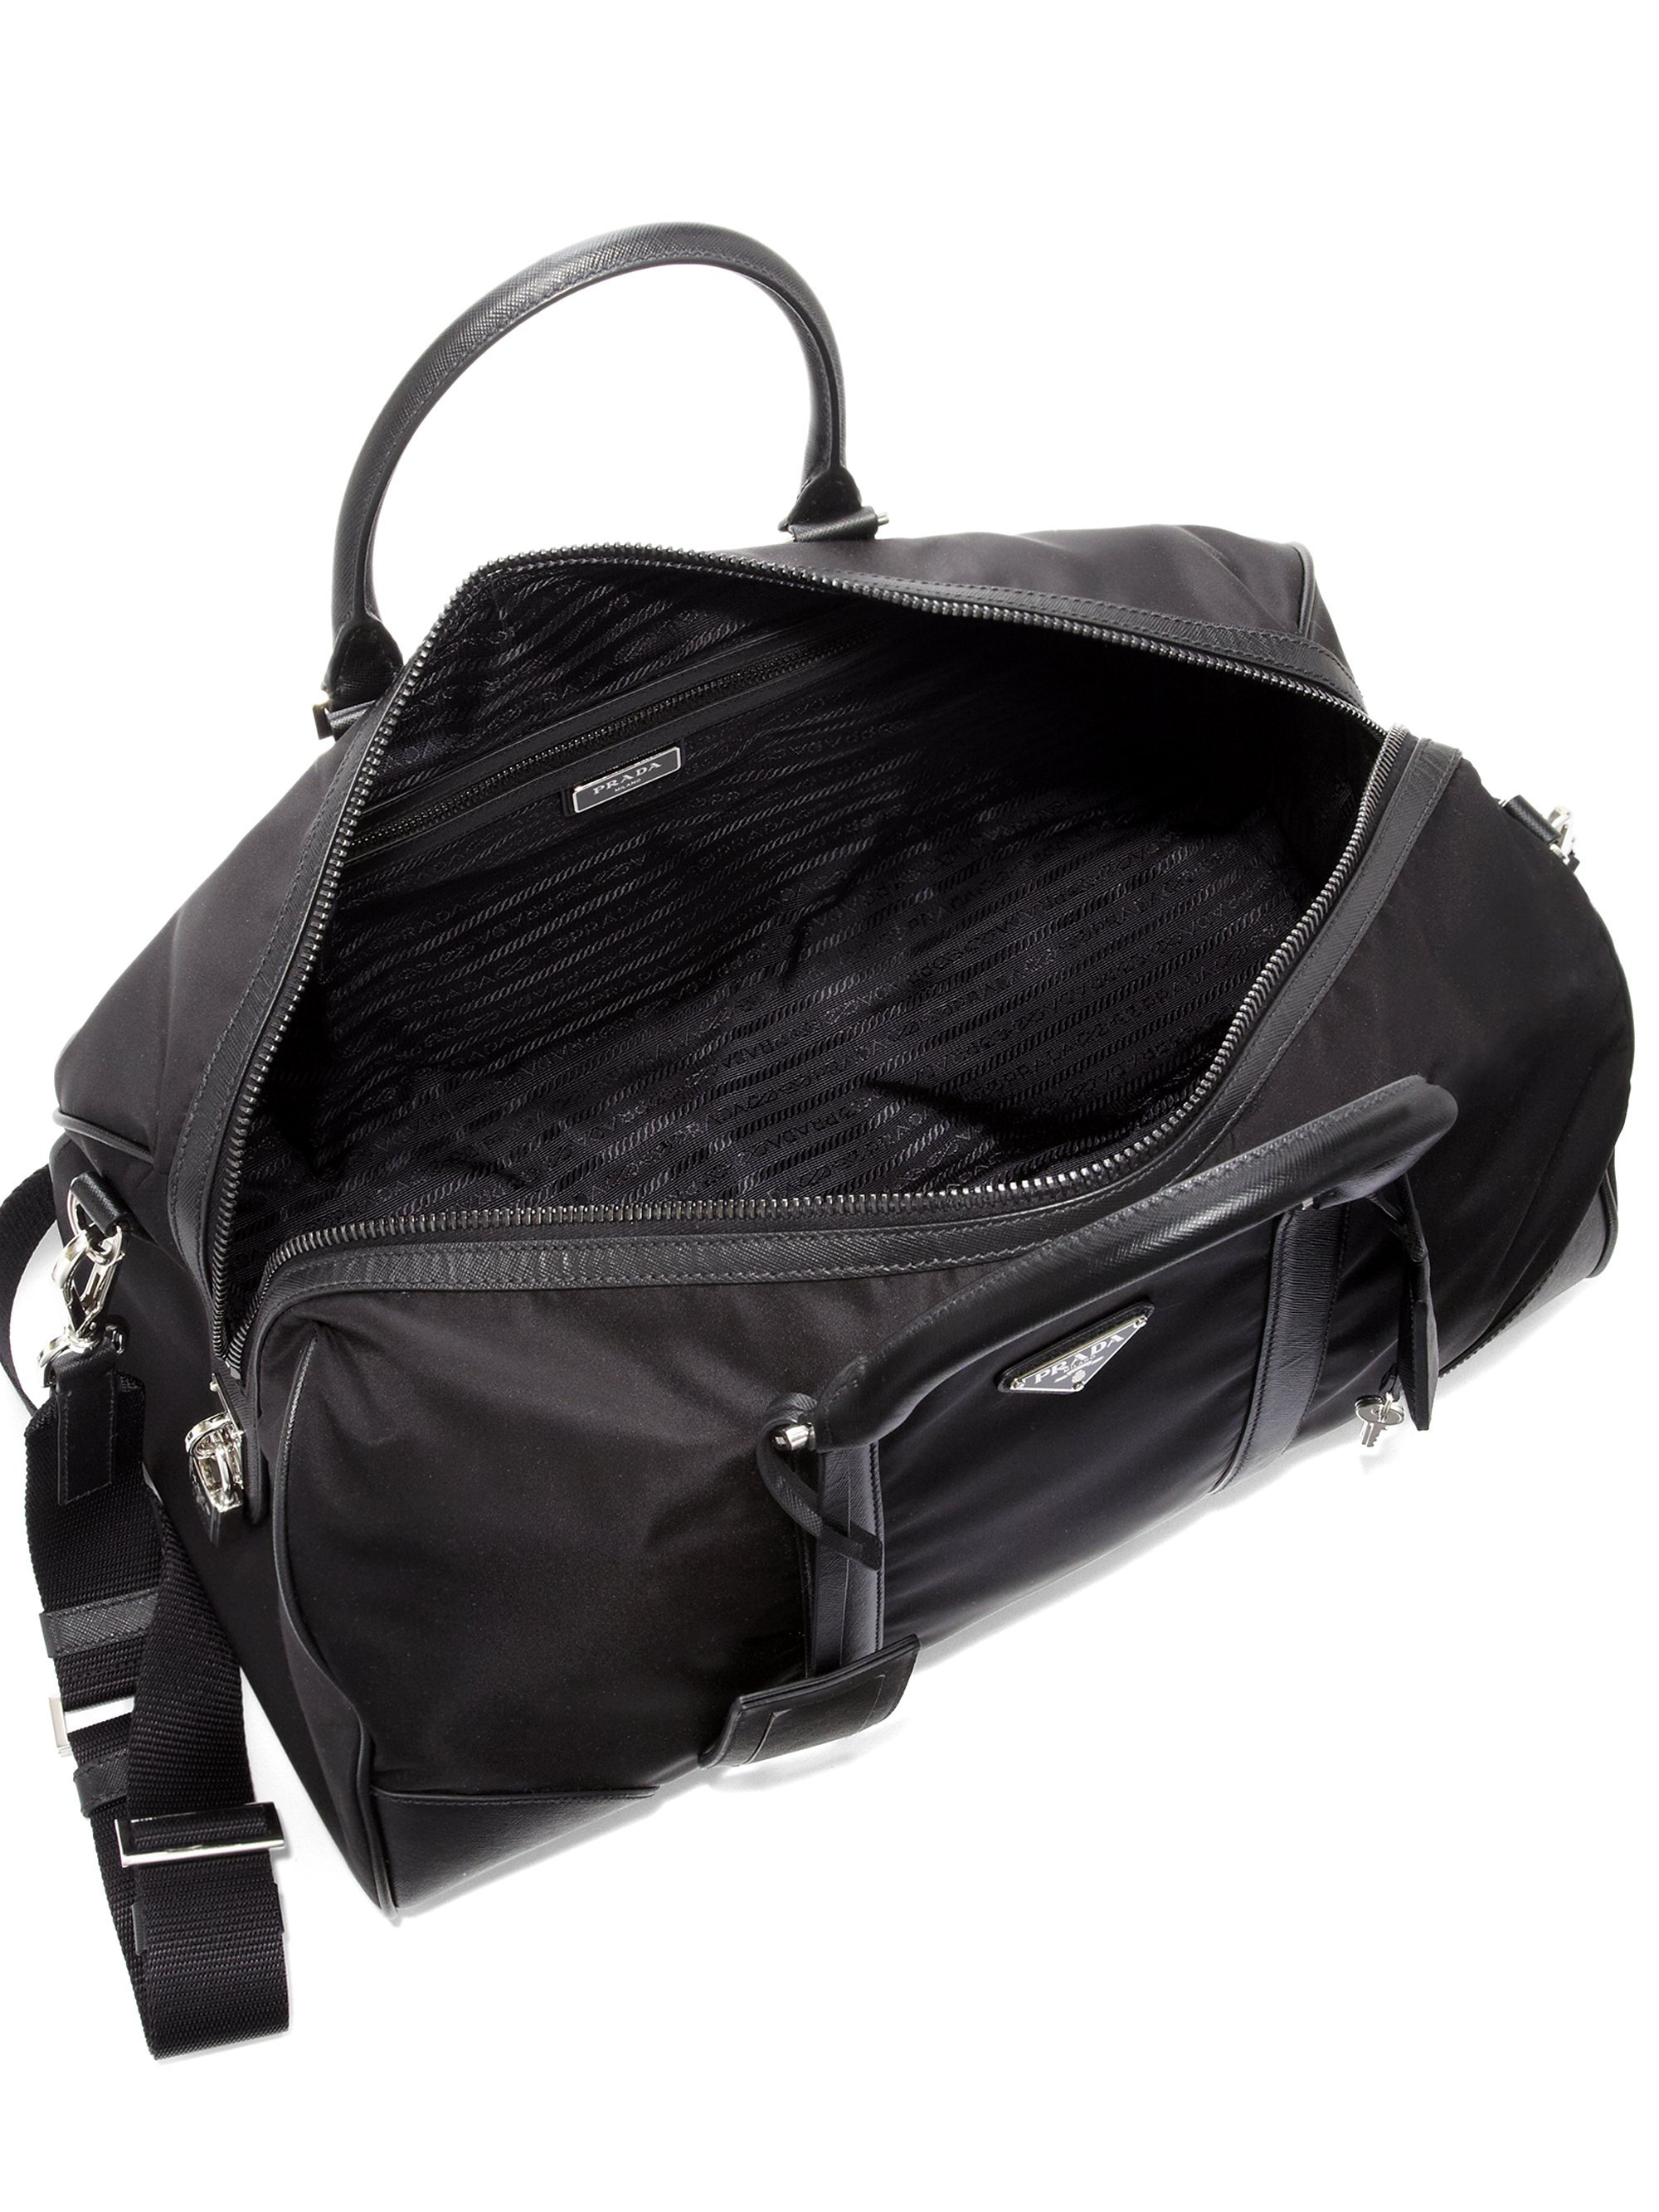 Prada Nylon & Saffiano Leather Duffel Bag in Black for Men - Lyst